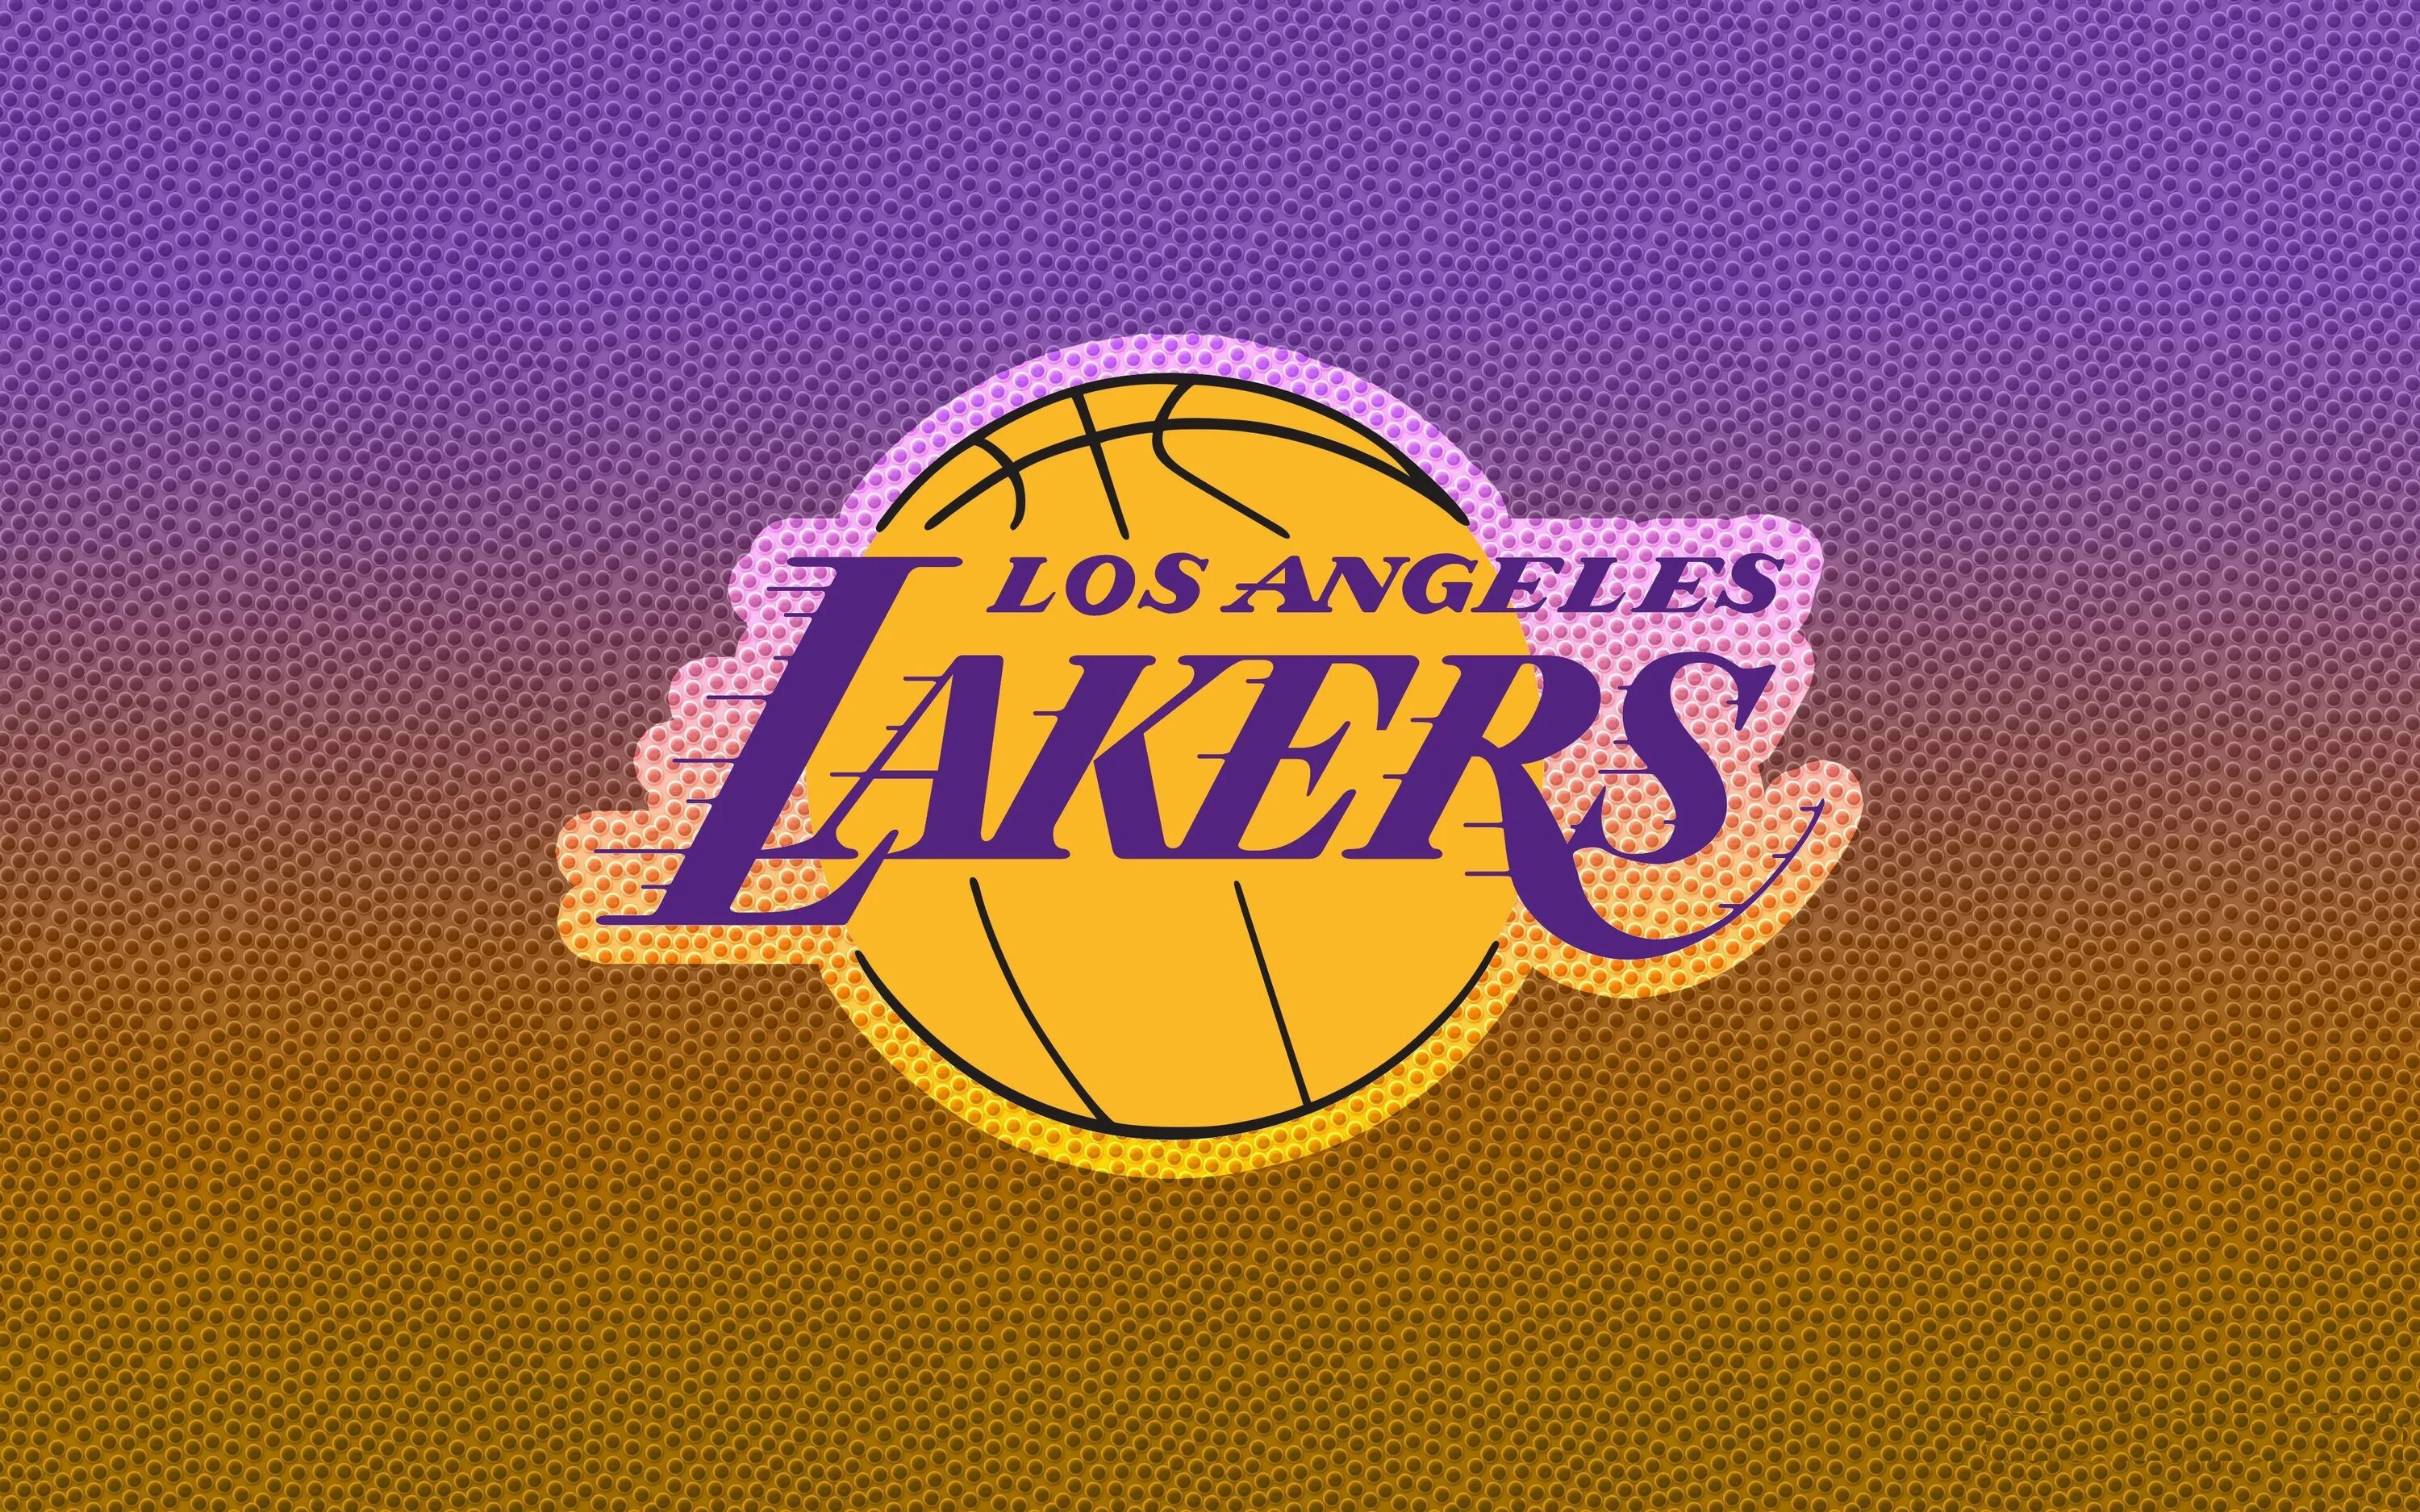 La lakers. Лос-Анджелес Лейкерс логотип. Баскетбол Лос Анджелес Лейкерс. NBA los Angeles Lakers логотип. Баскетбольный клуб Лос-Анджелес Лейкерс лого.